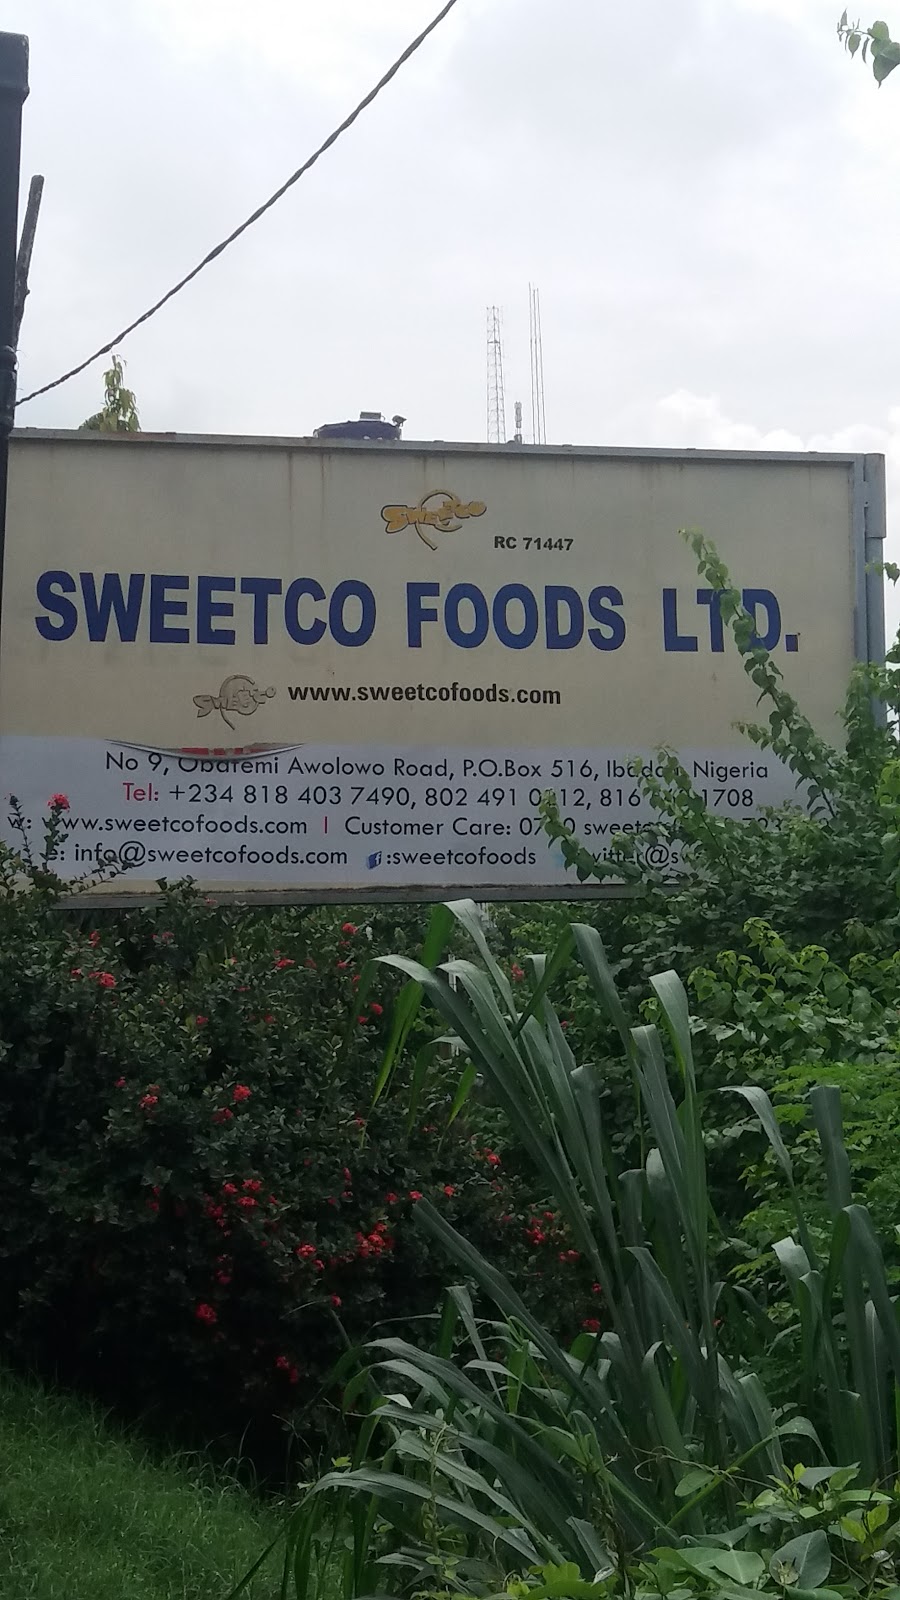 Sweetco Foods Ltd